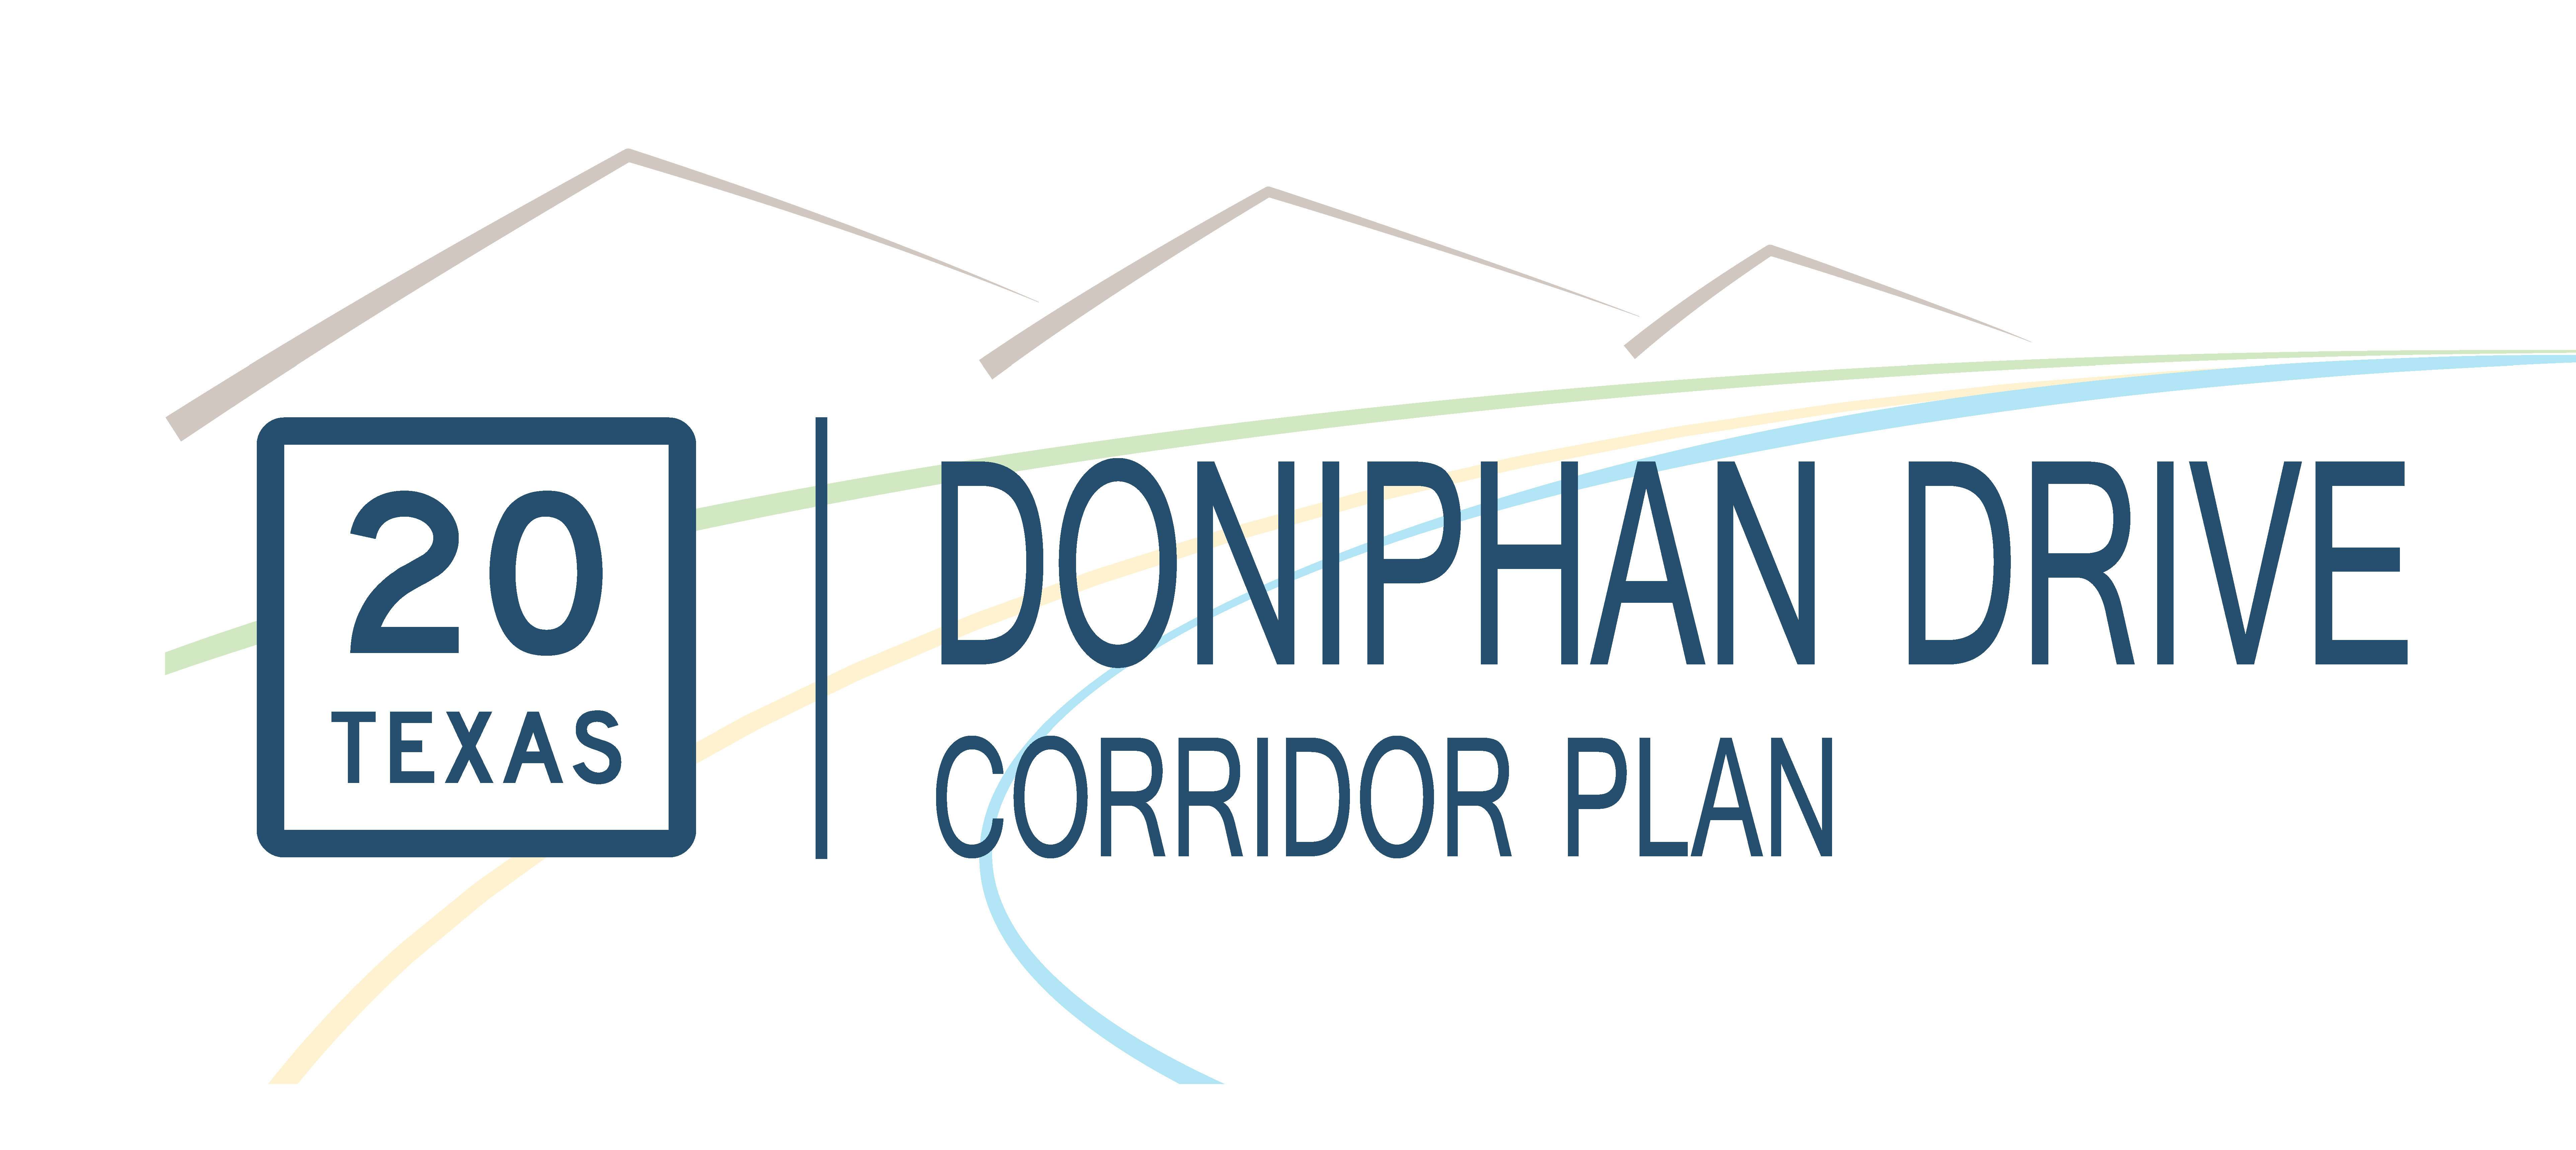 Doniphan Drive Corridor Plan